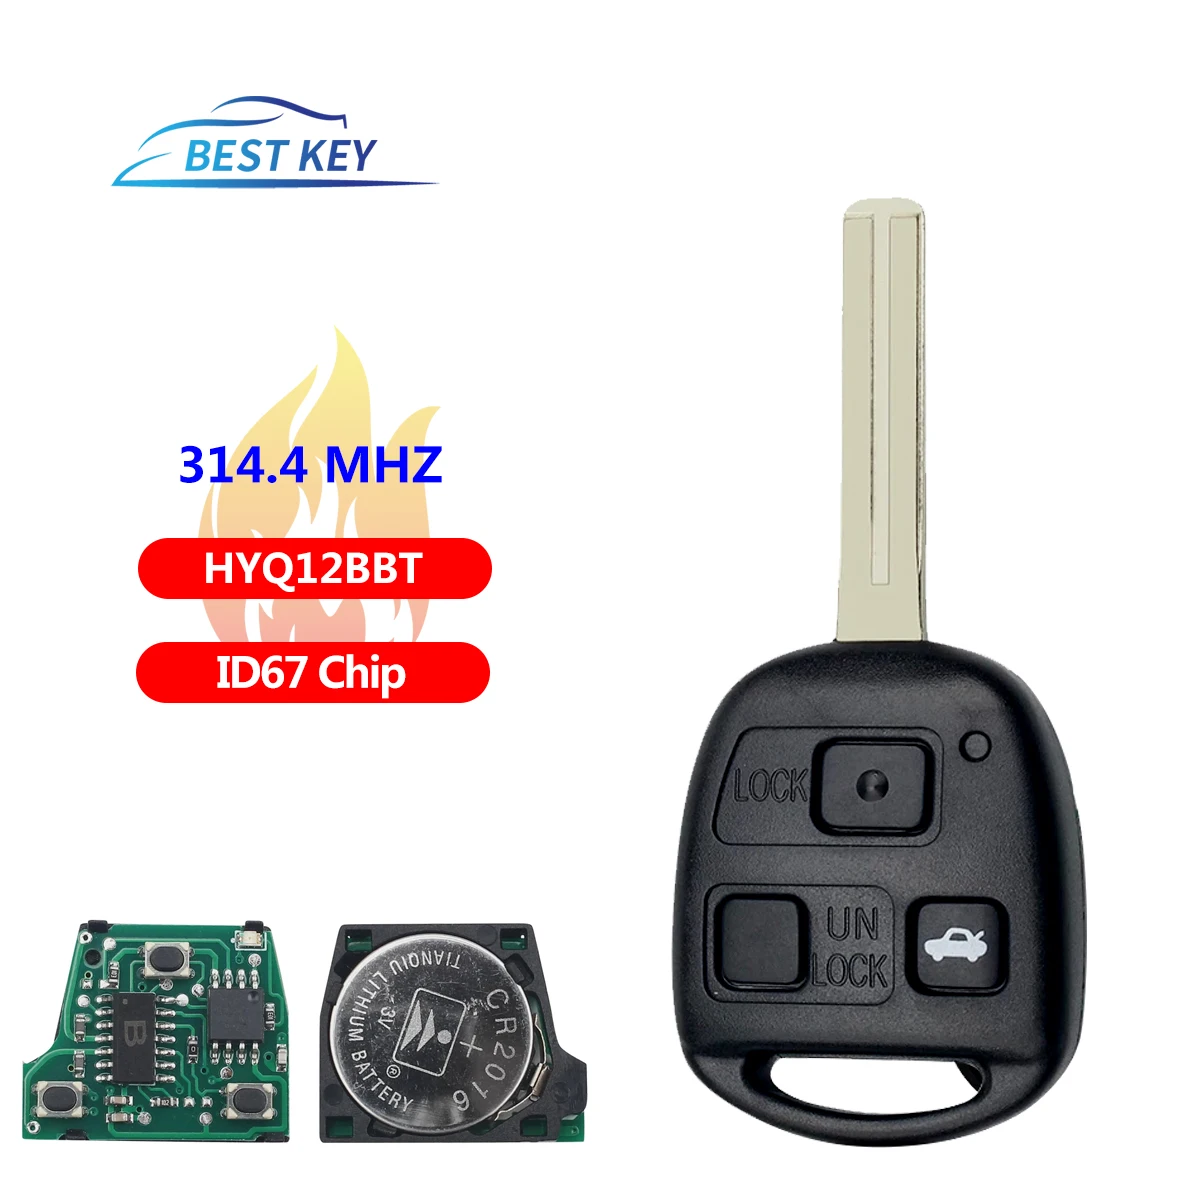 BEST KEY  314.4 Mhz HYQ12BBT RX350 2007-2009 LS430 ES330 SC430  3 Buttons Fob 4D67 Chip Car Remote Key For Lexus RX330 2004-2006 jingyuqin hyq12bbt remote control car key 4d68 chip 314 4mhz for toyota for lexus rx330 rx350 rx400h rx450h 3 buttons fob